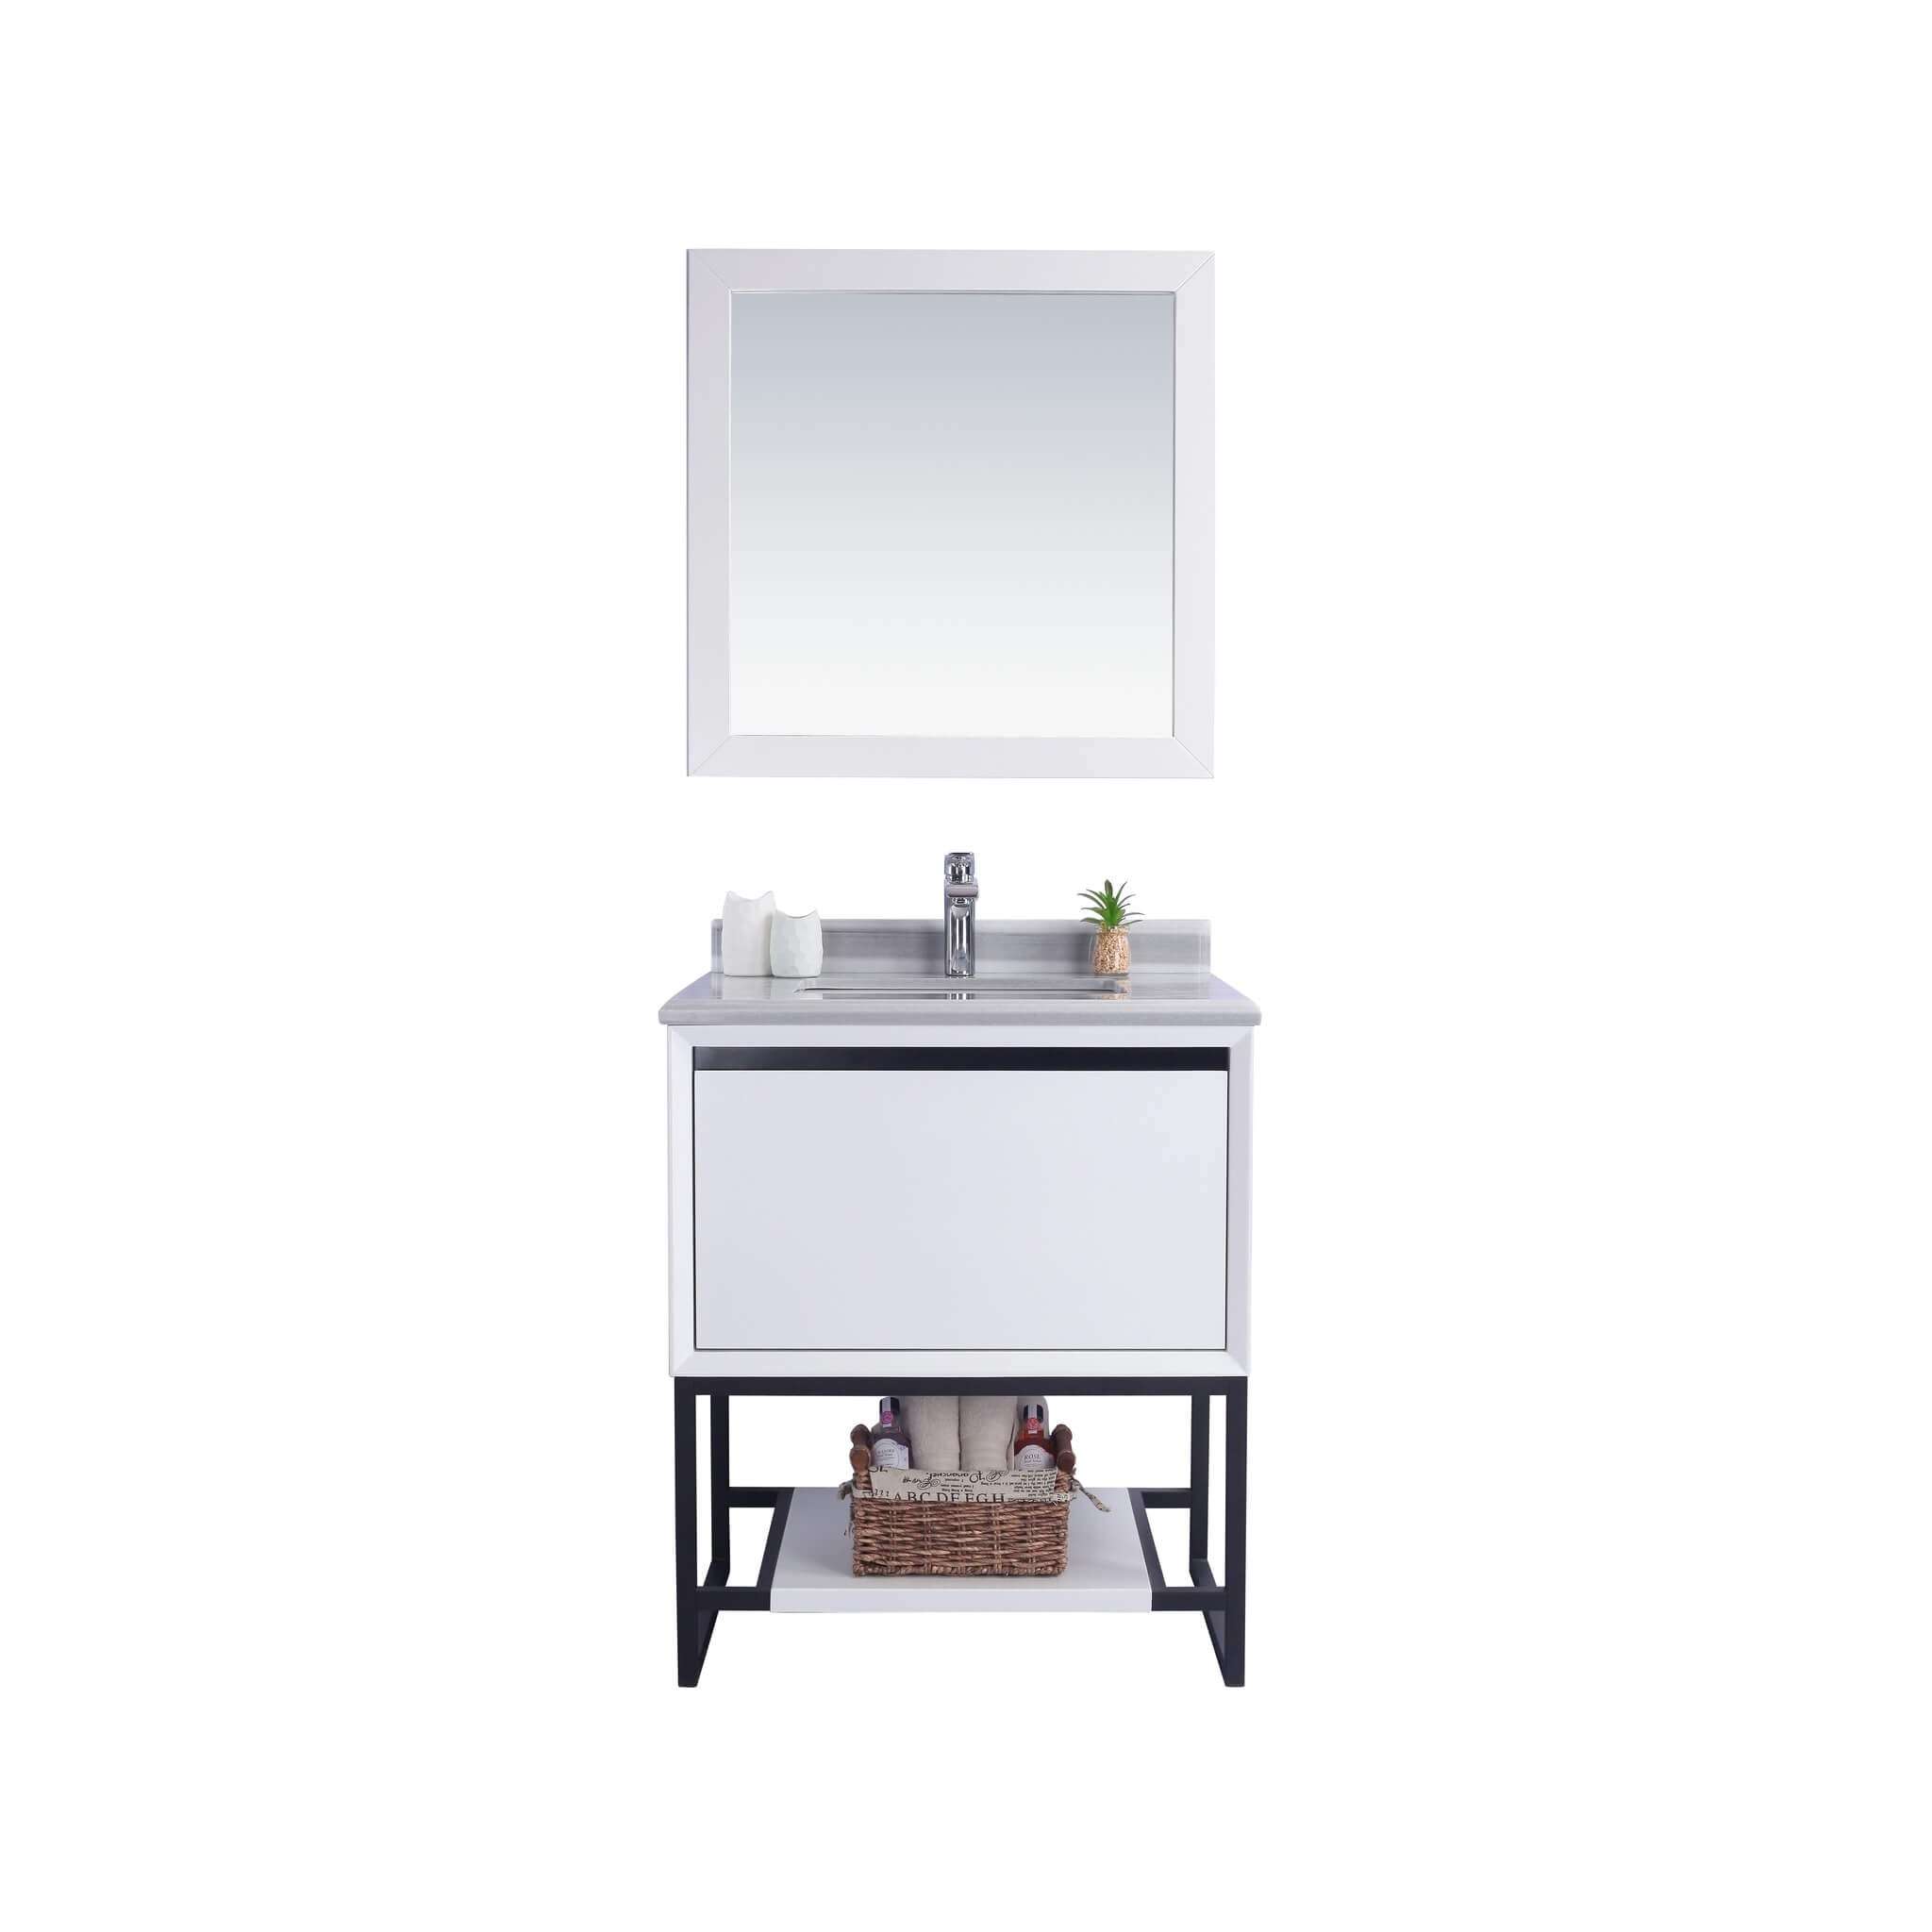 LAVIVA Alto 313SMR-30W-WS 30" Single Bathroom Vanity in White with White Stripes Marble, White Rectangle Sink, Front View